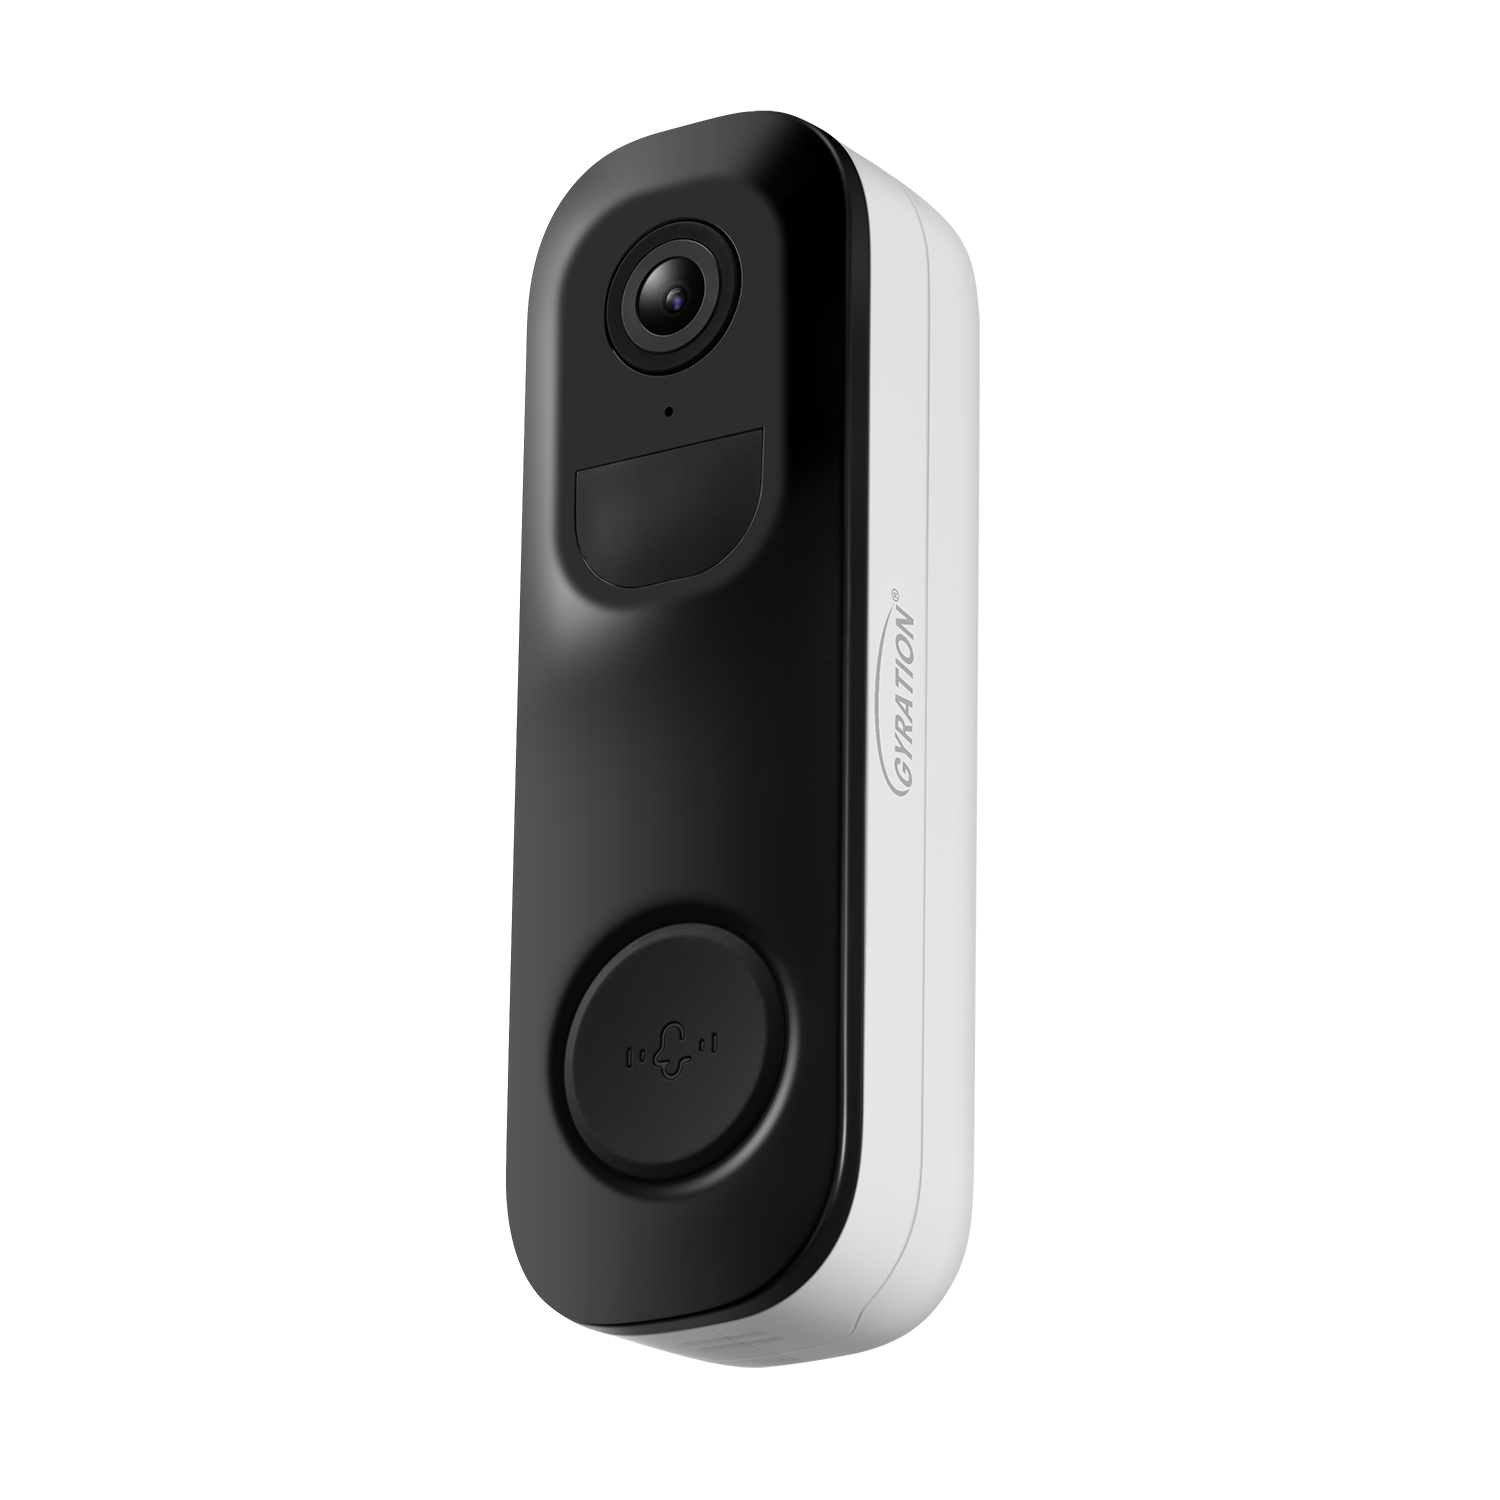 3MP Smart WiFi Wireless Doorbell Camera - Gyration